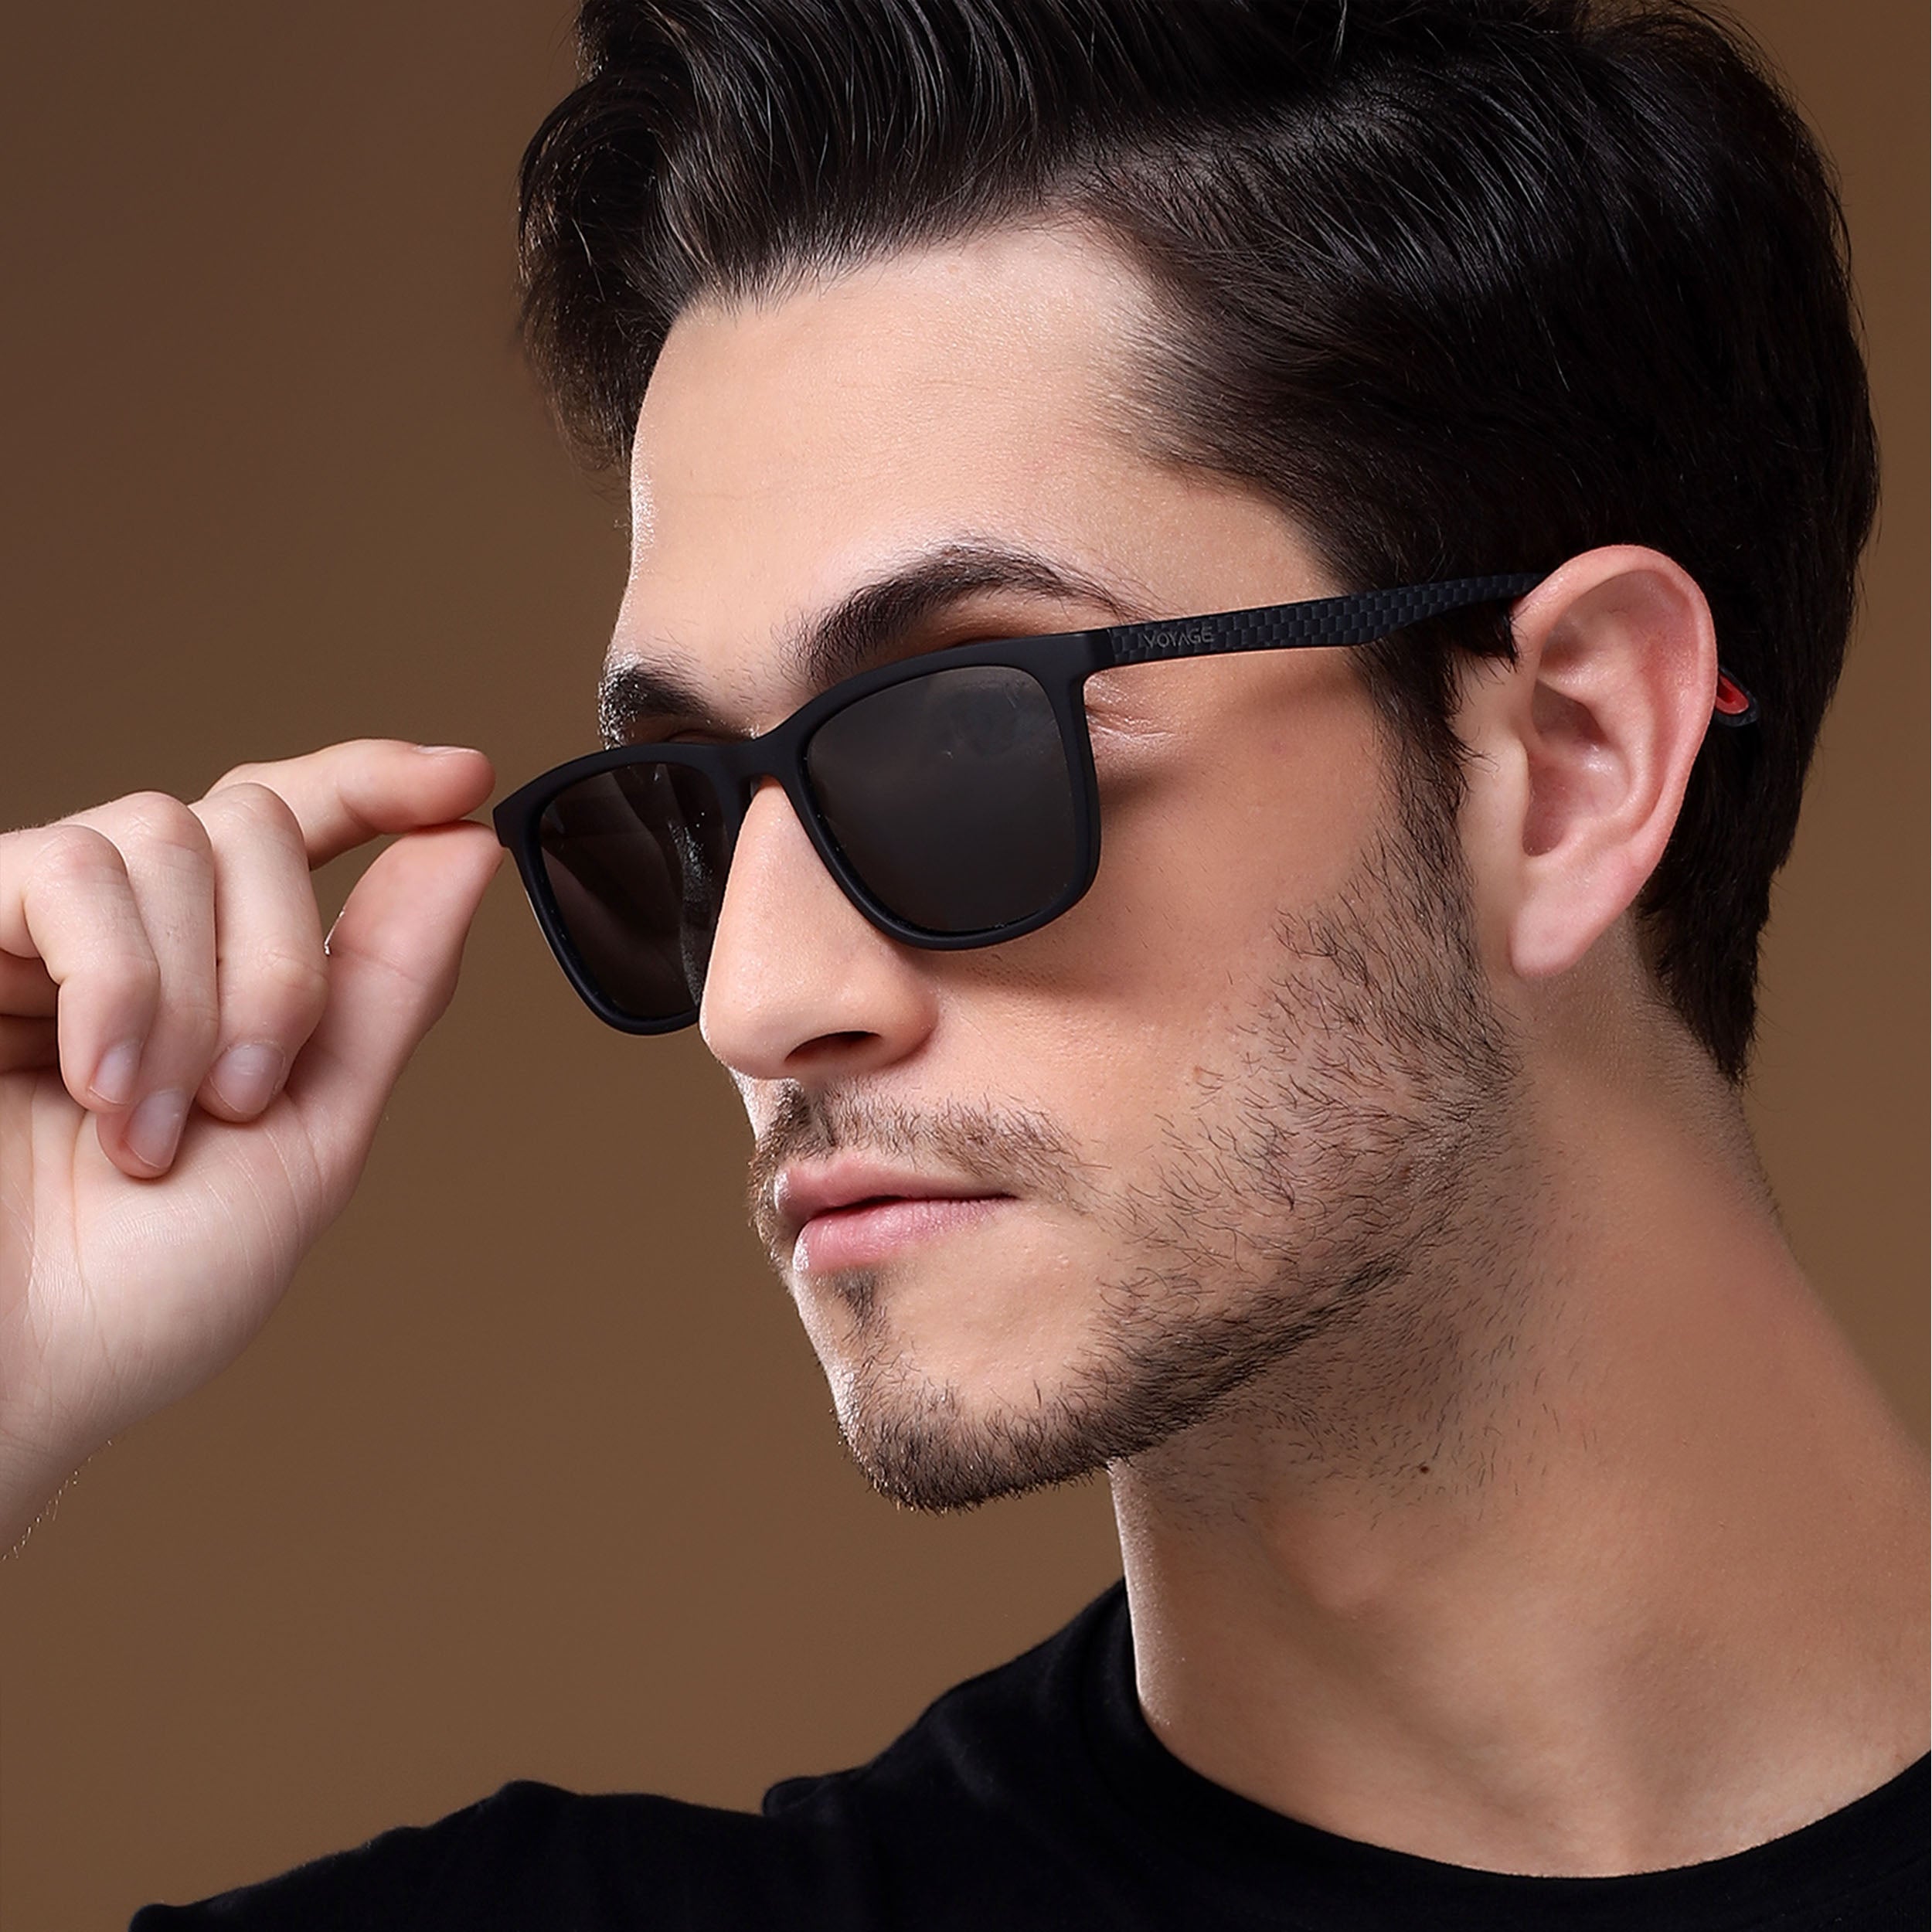 Voyage Exclusive Wayfarer Polarized Sunglasses for Men & Women (Black Lens | Matt Black Frame - PMG5255)